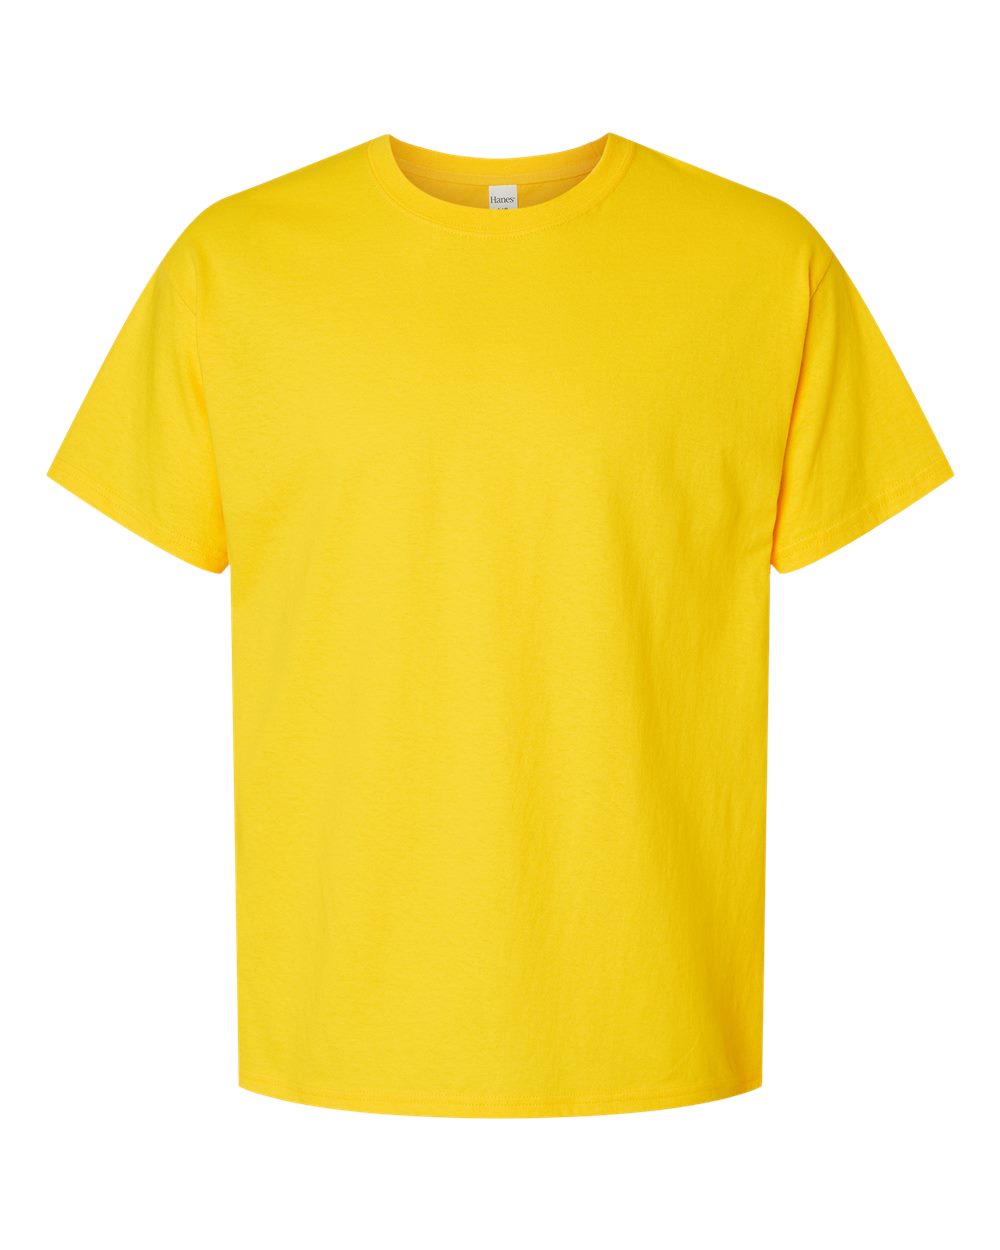 Pretreated Hanes 5280 Essential-T T-Shirt